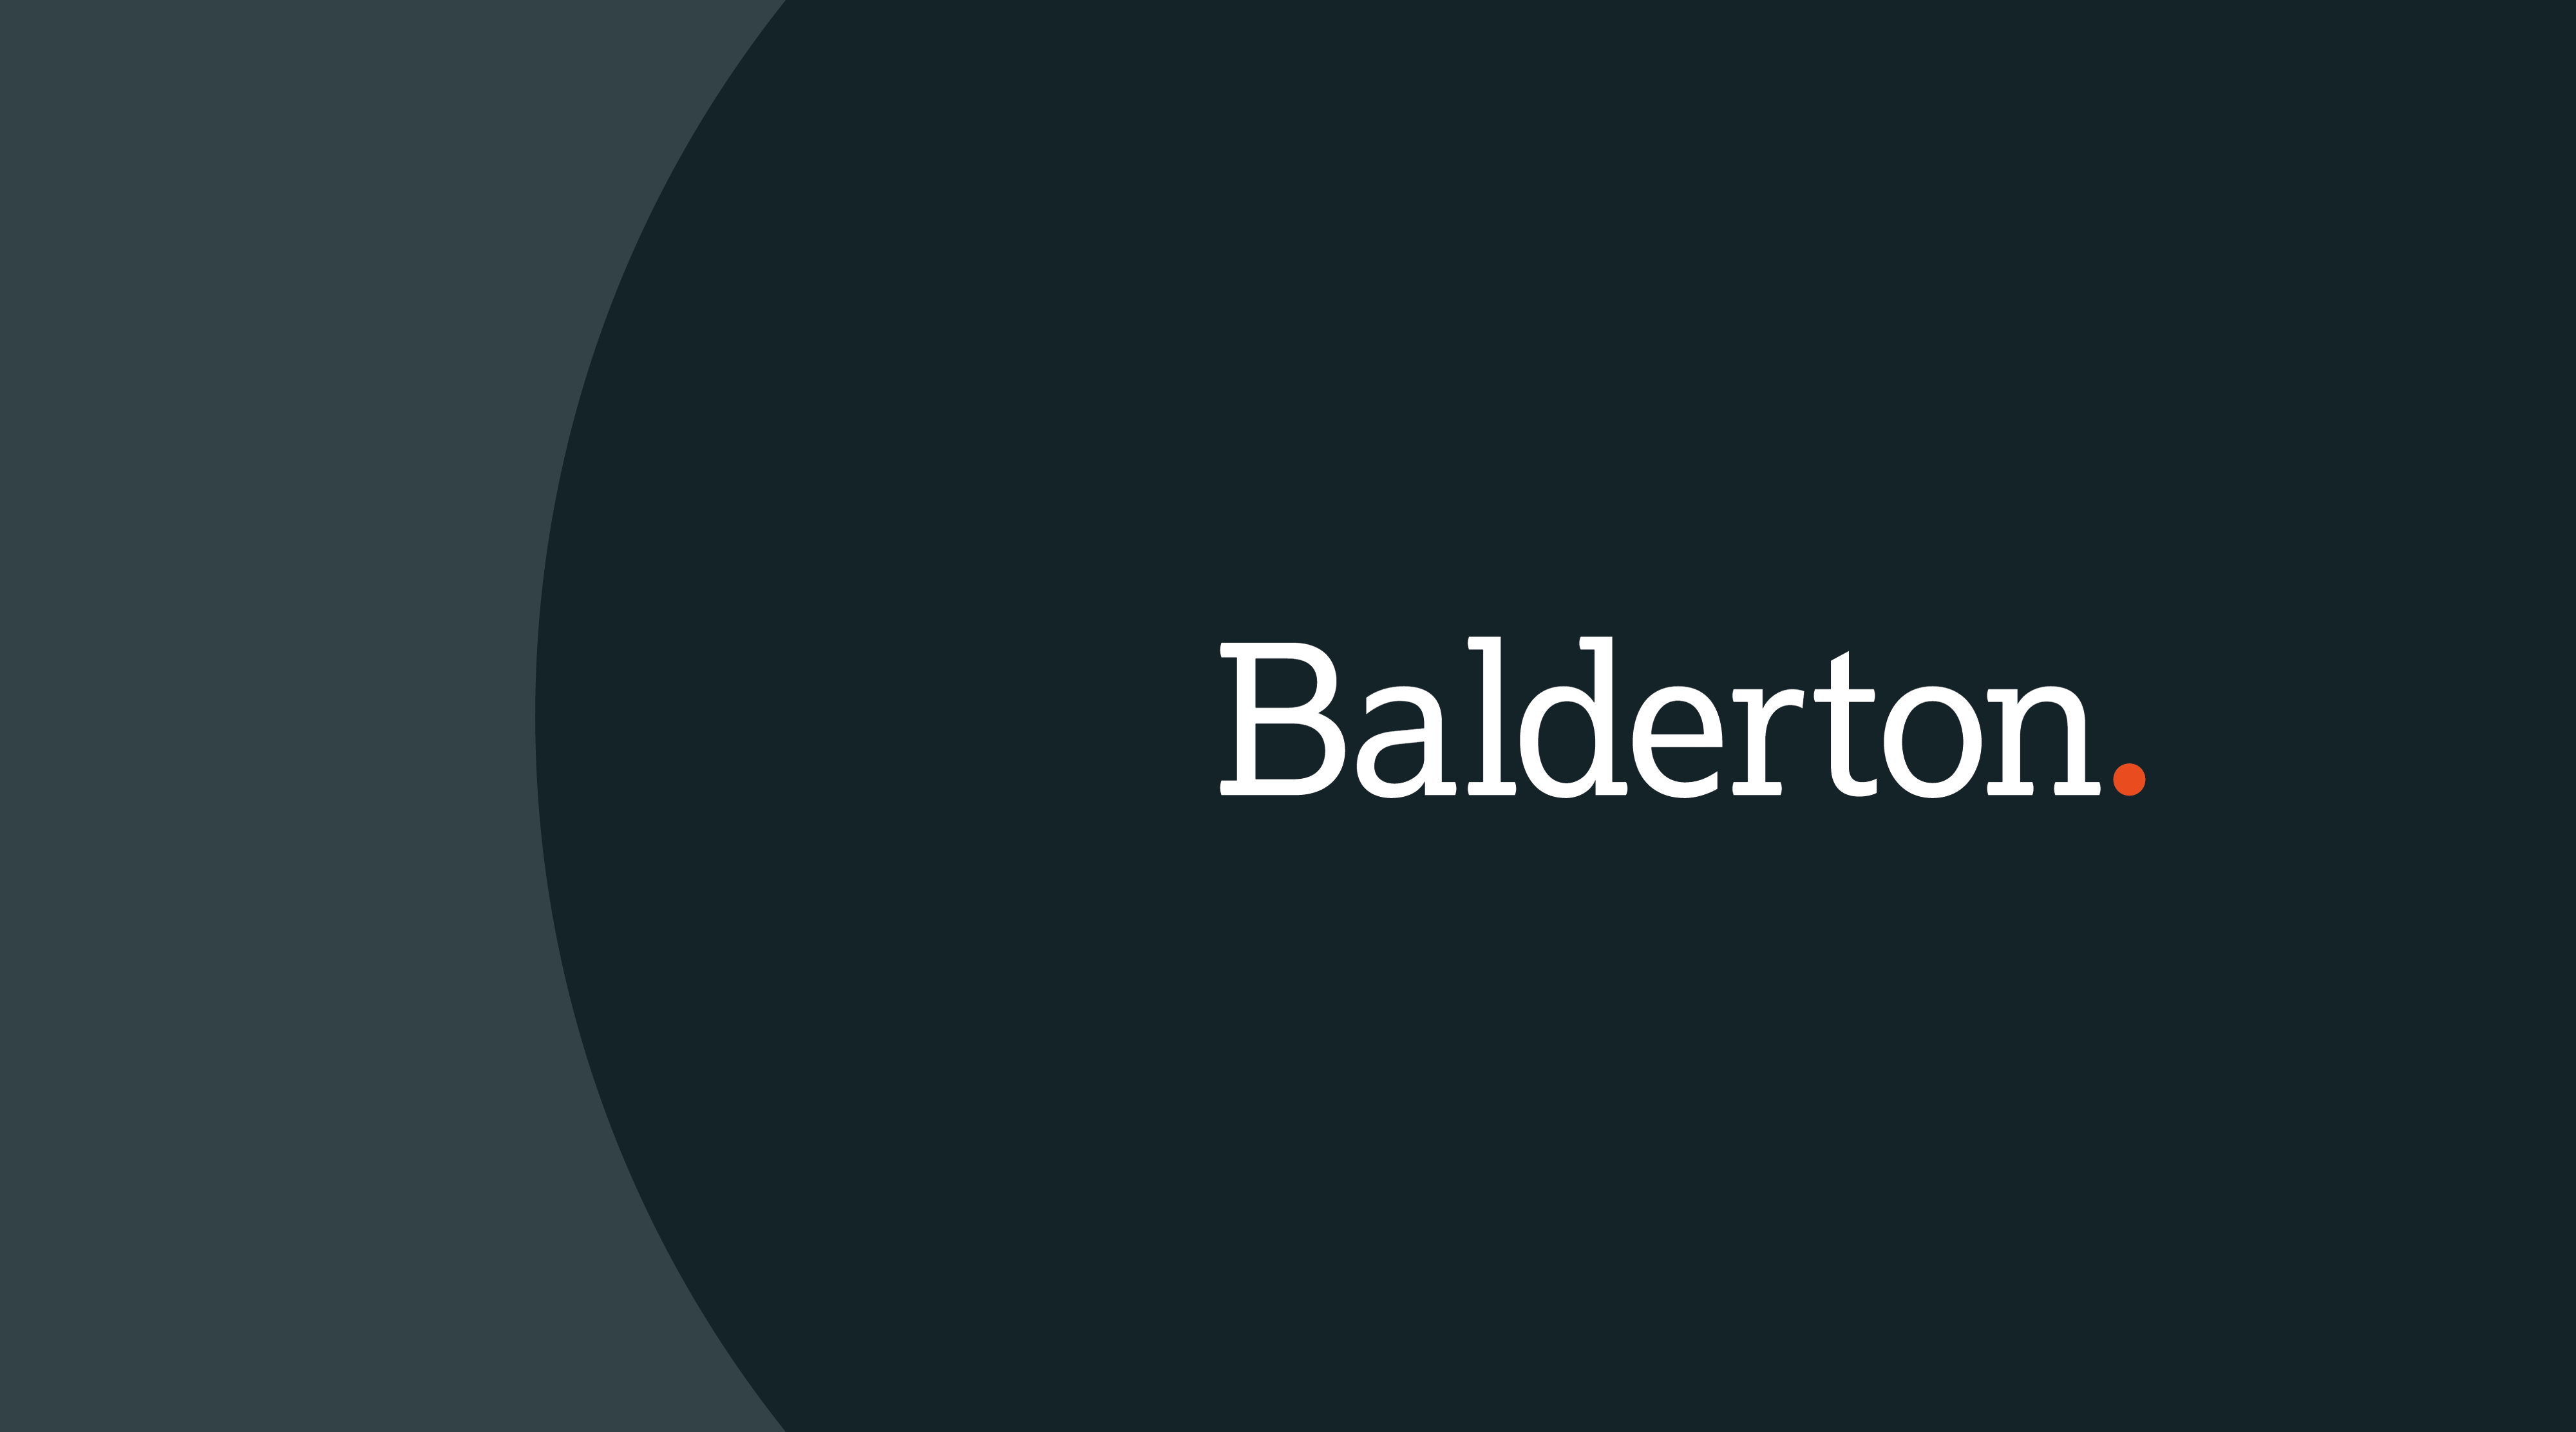 (c) Balderton.com